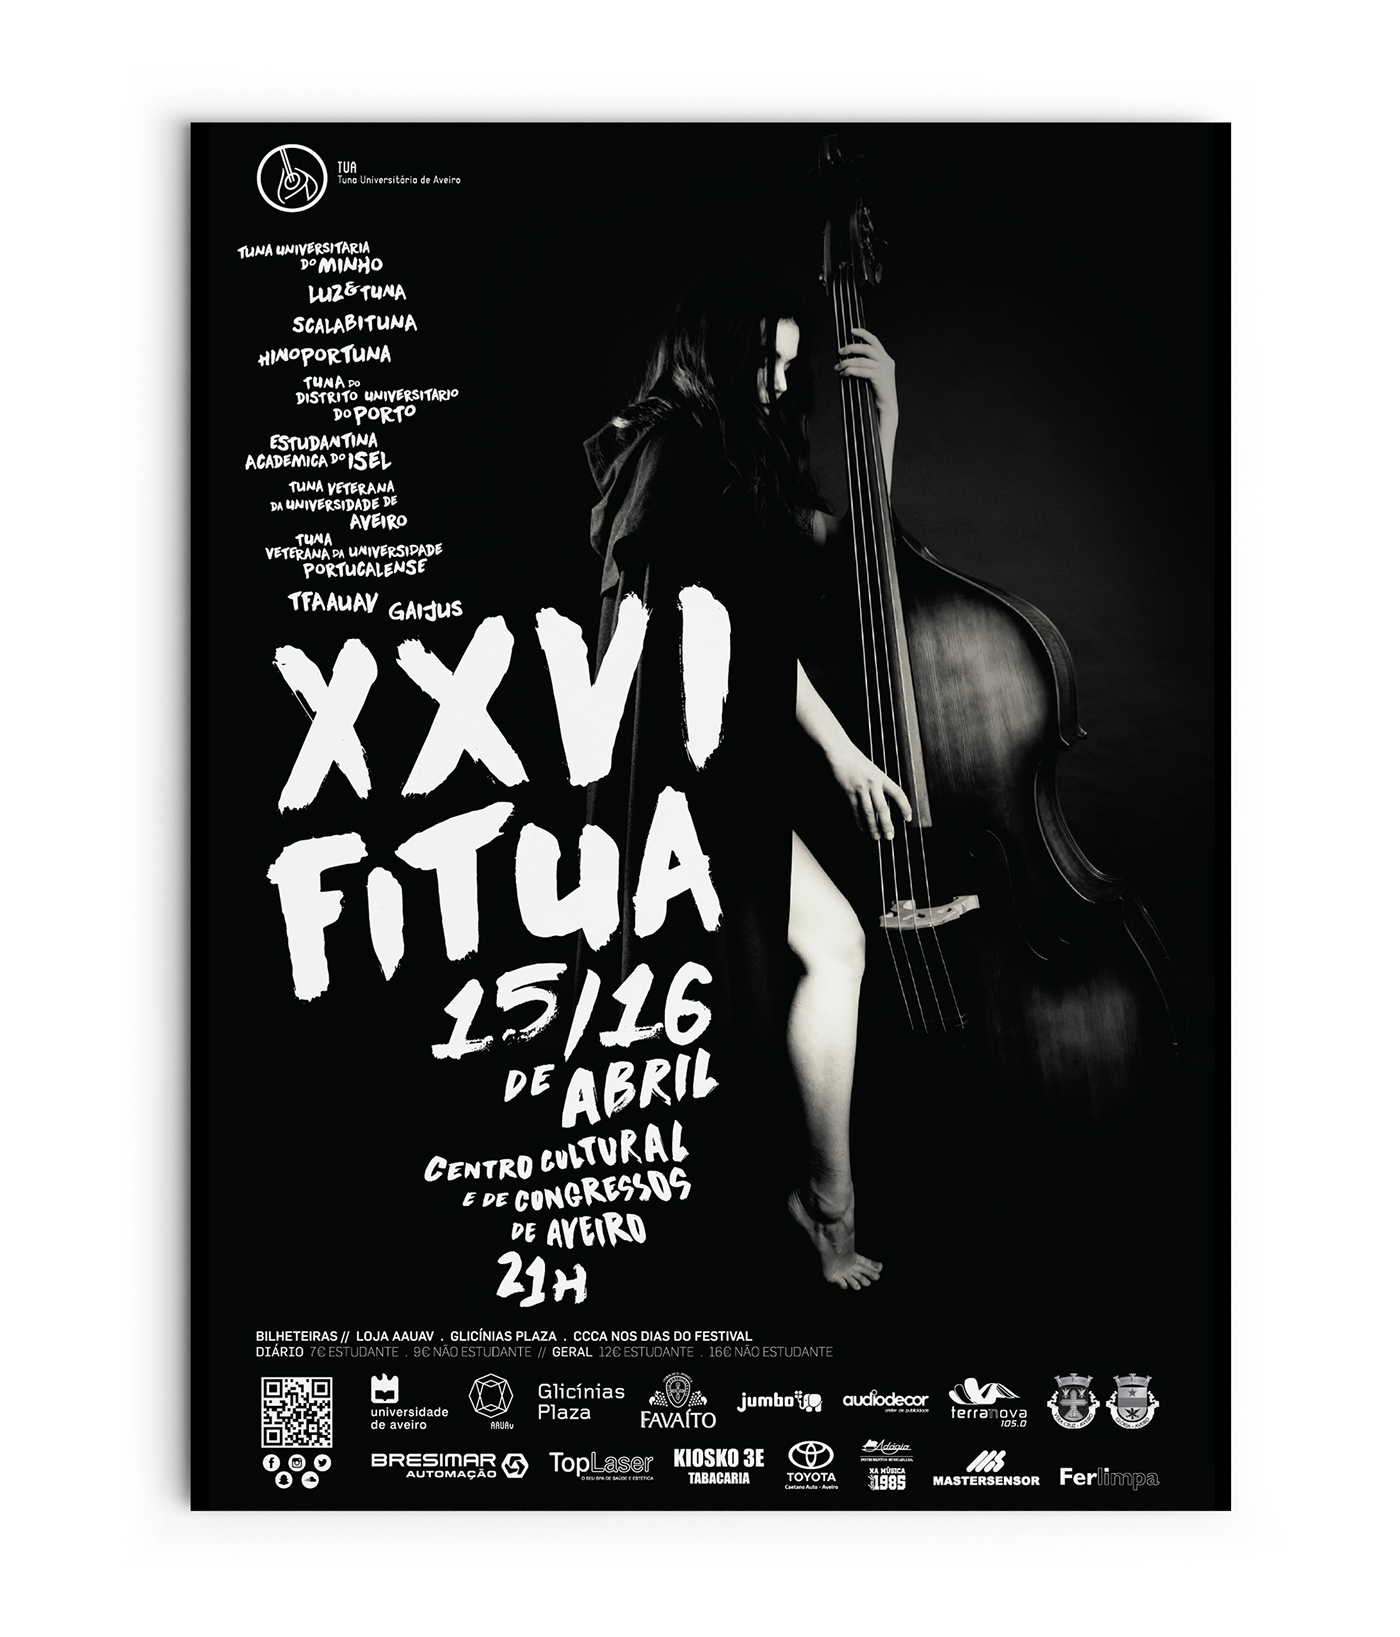 Aveiro tuna University music festival graphic design  direction communication